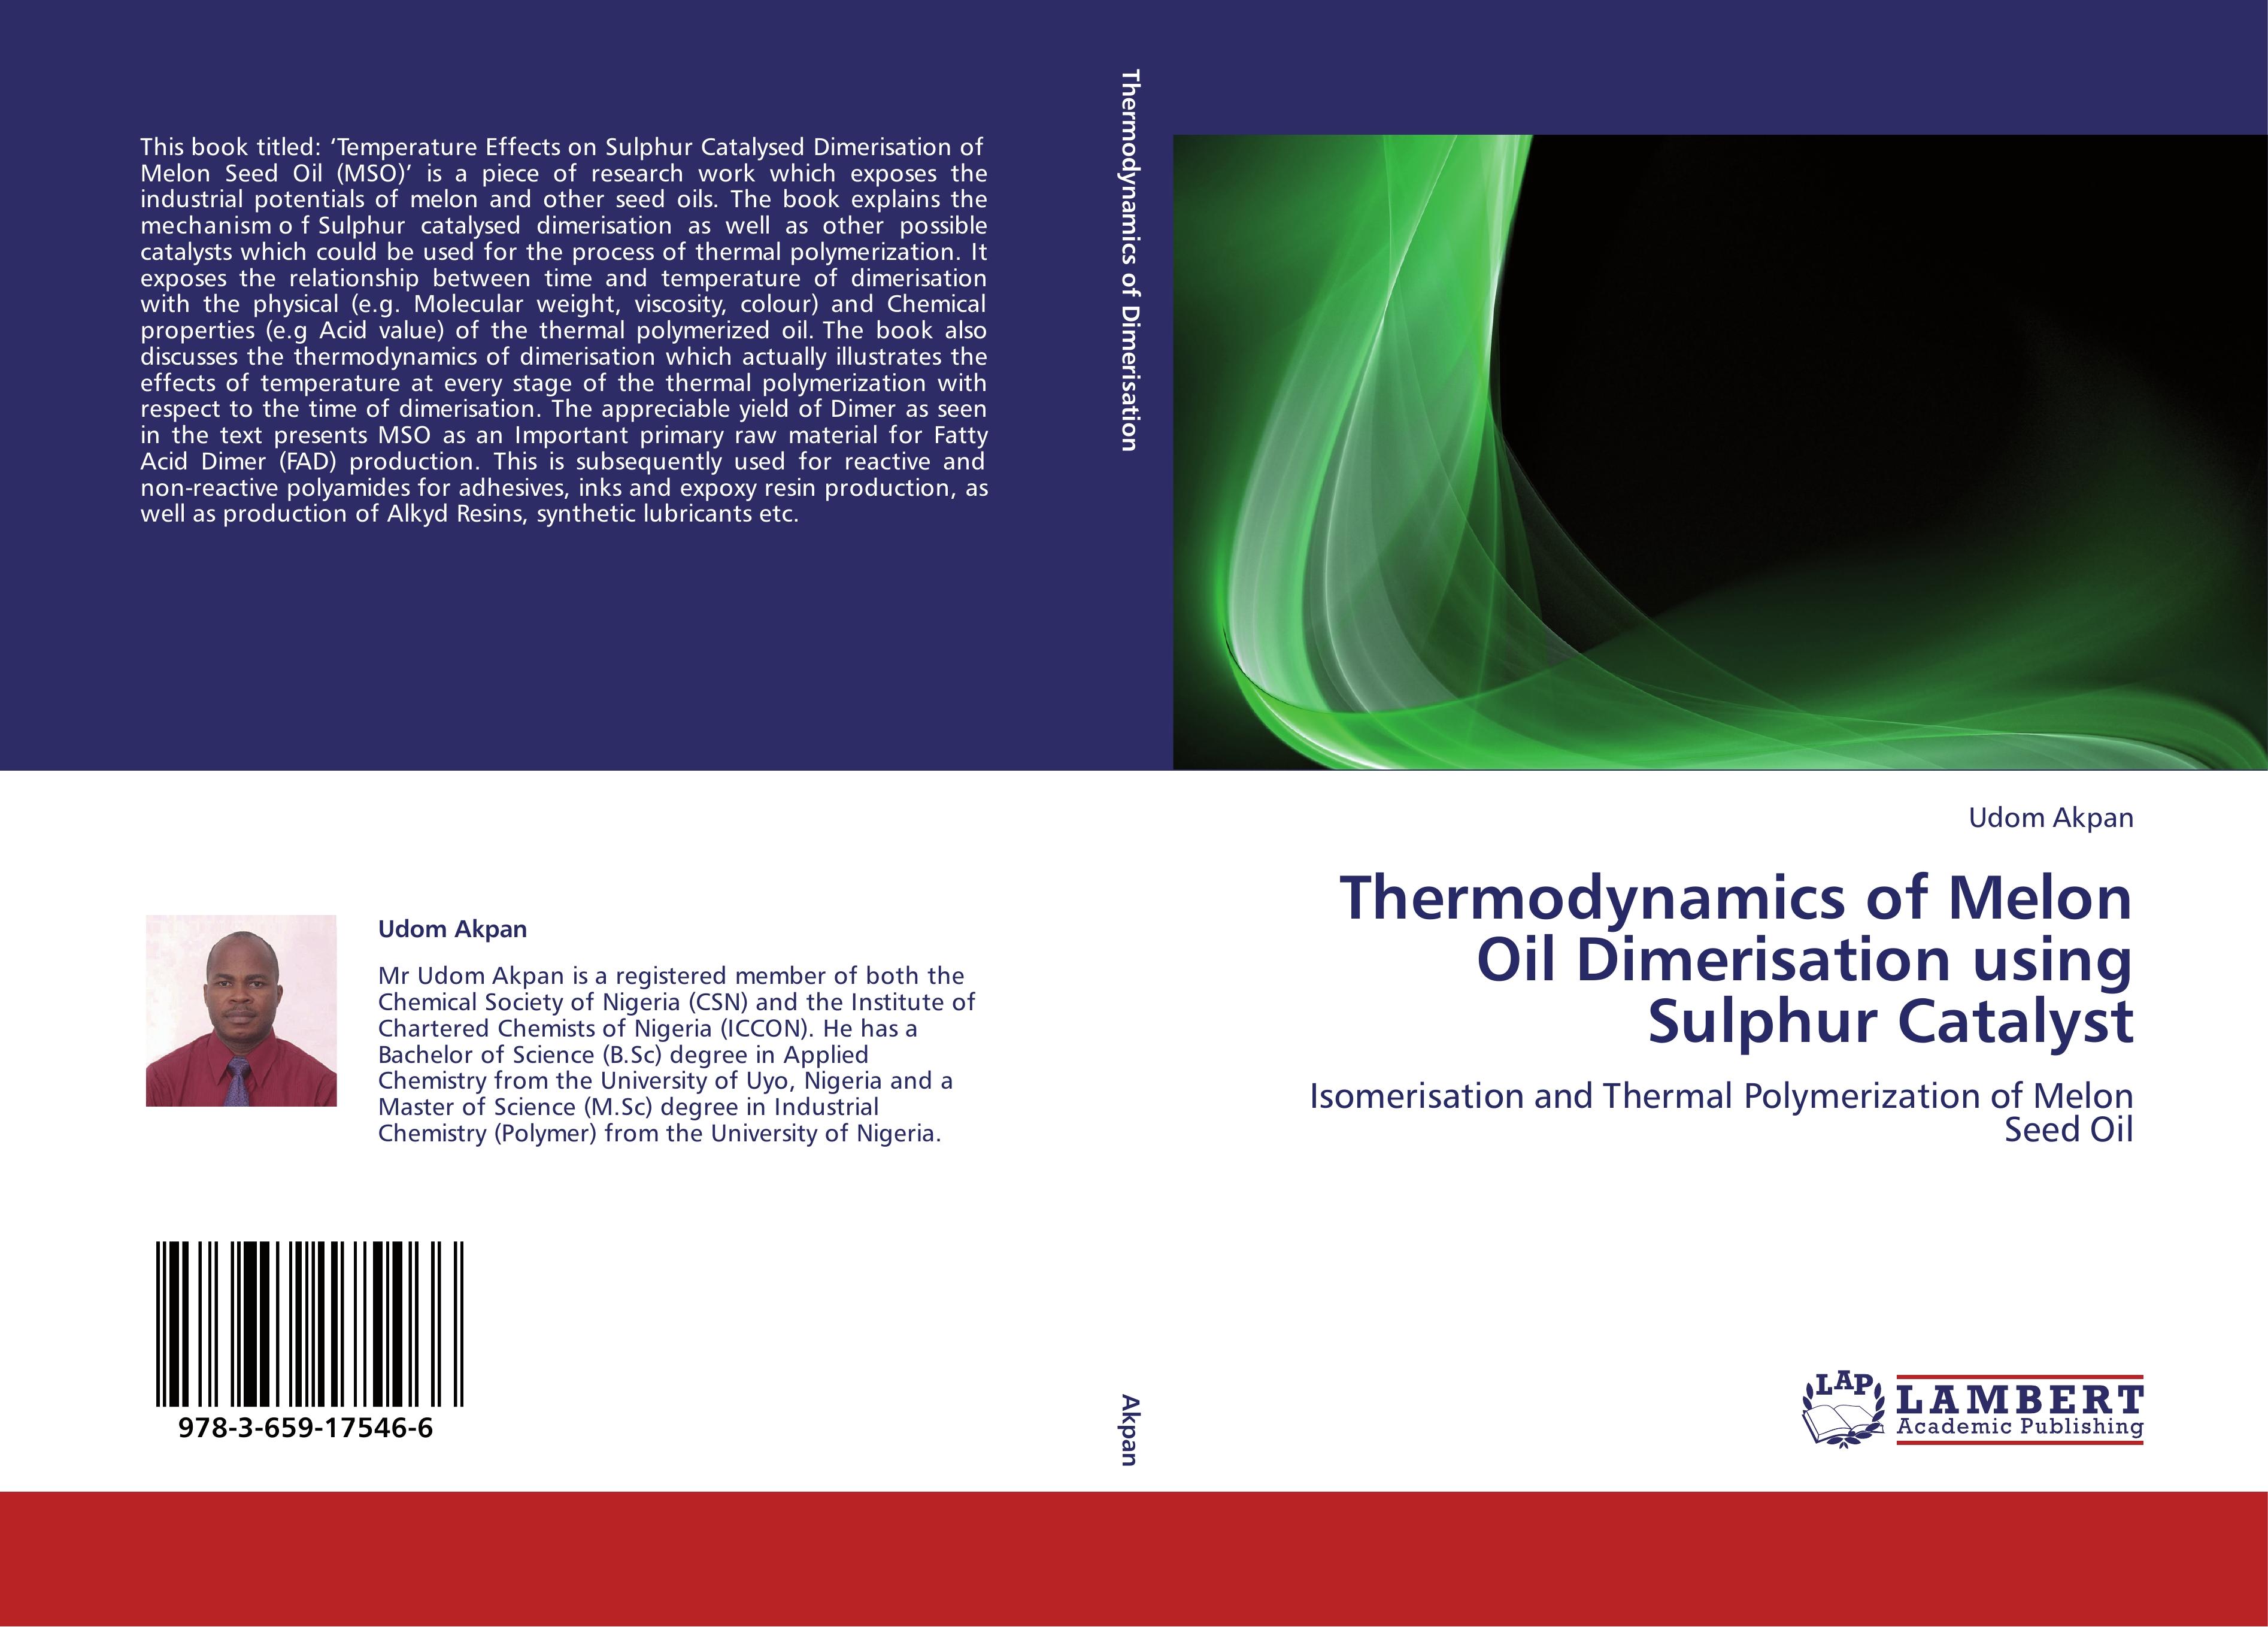 Thermodynamics of Melon Oil Dimerisation using Sulphur Catalyst - Udom Akpan